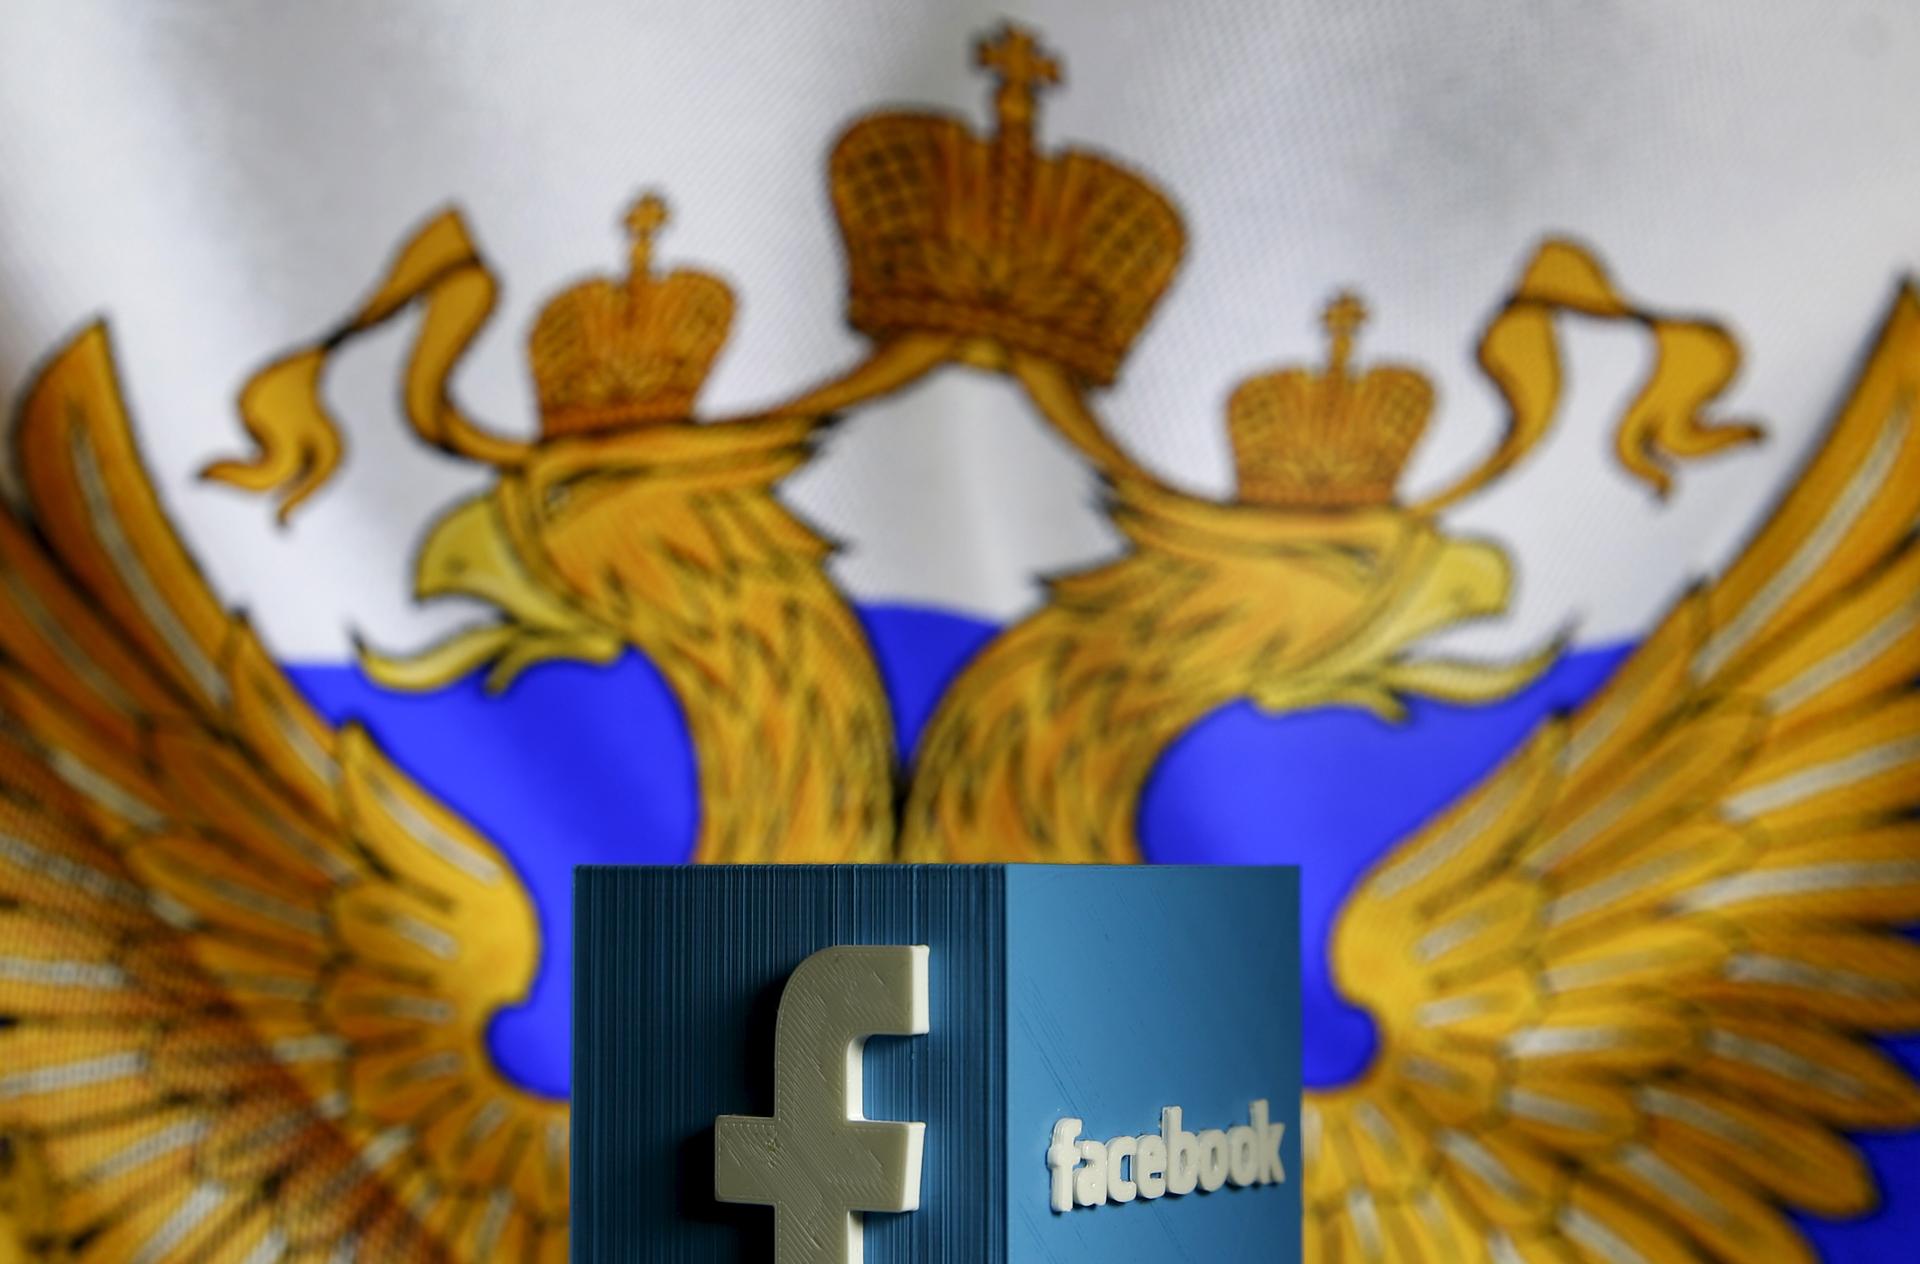 A 3D model of the Facebook logo